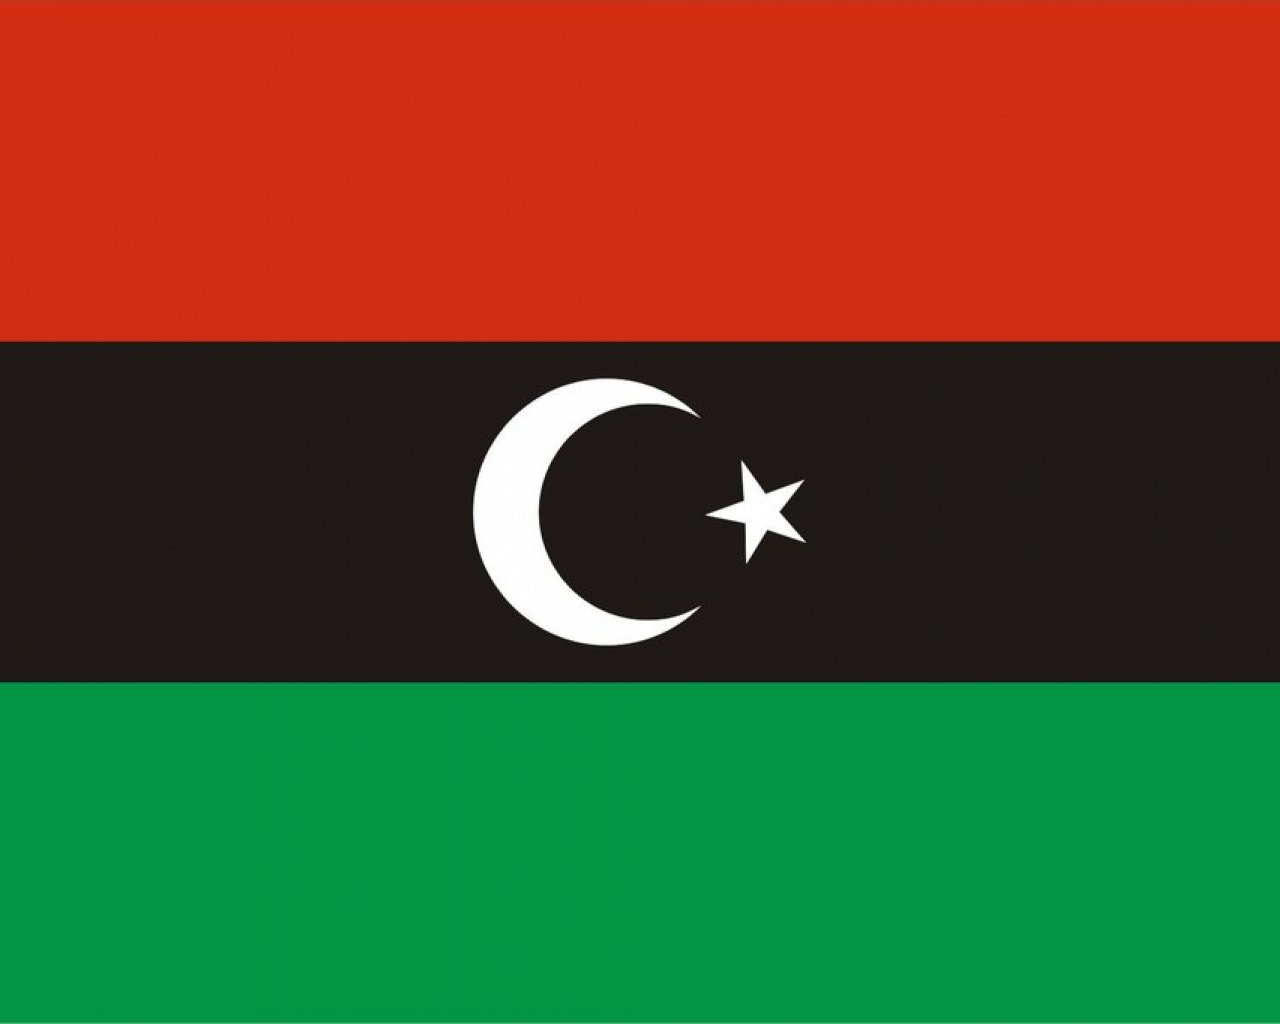 LIBYE